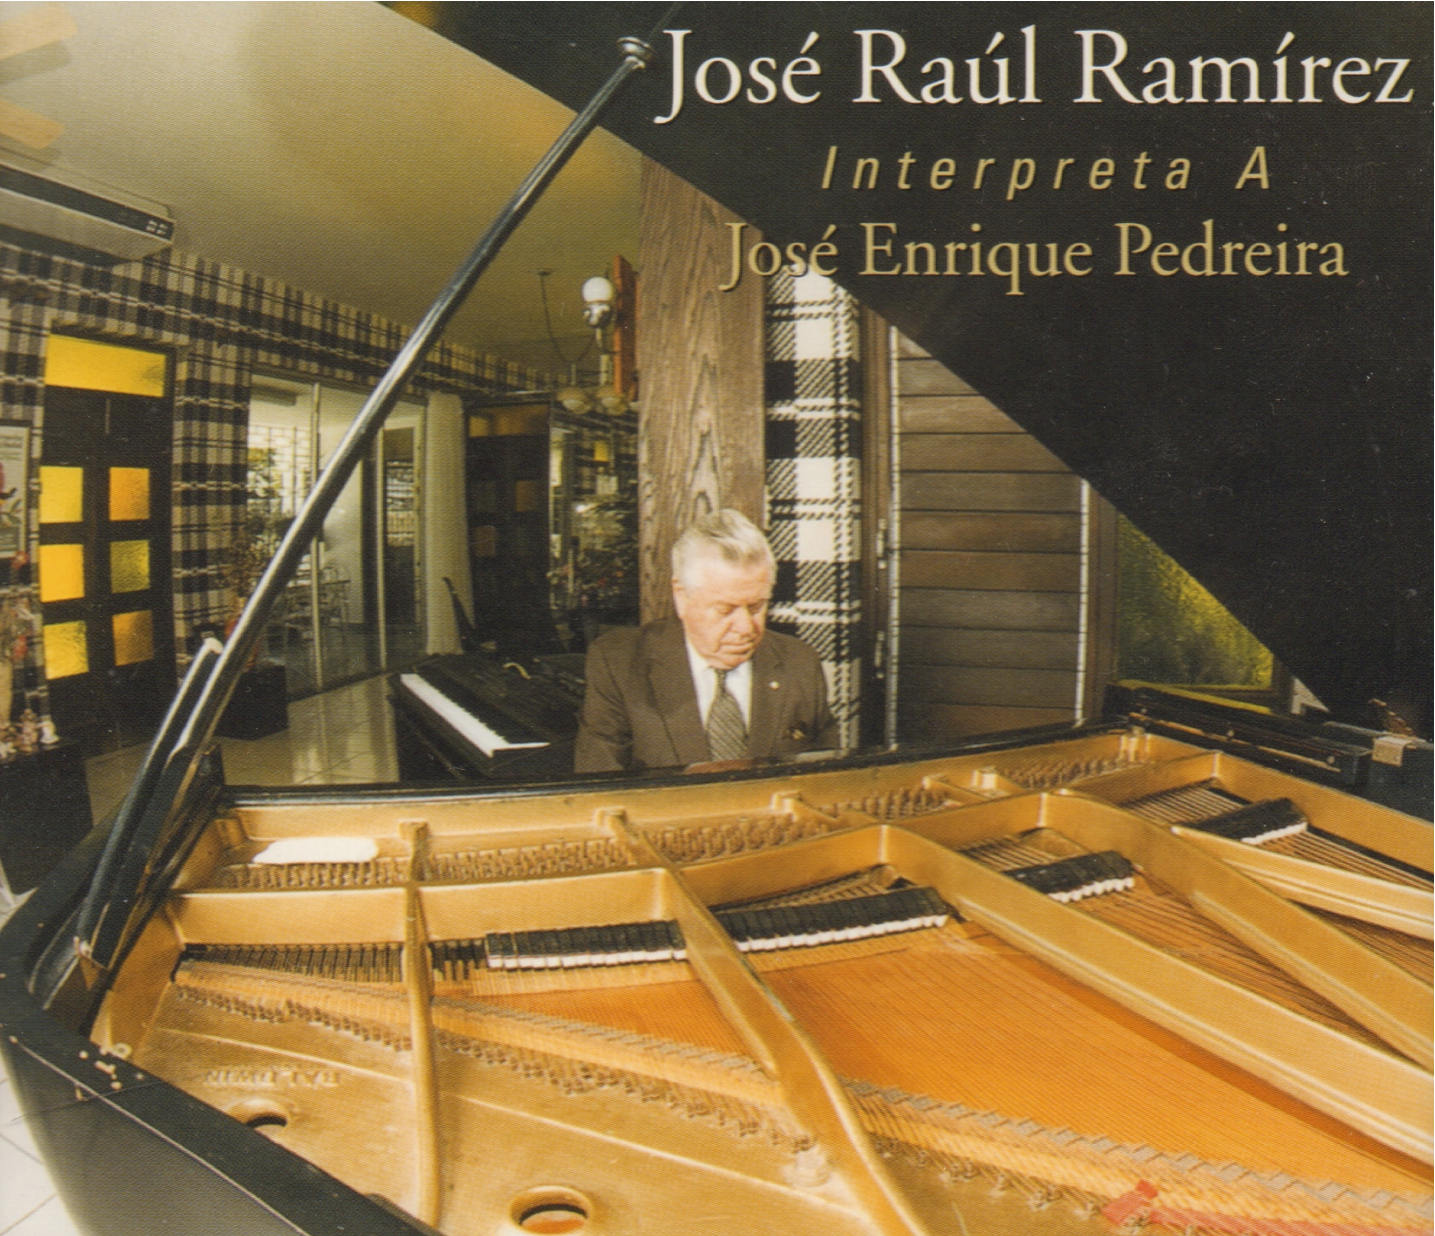 José Raúl Ramírez interpreta a José Enrique Pedreira